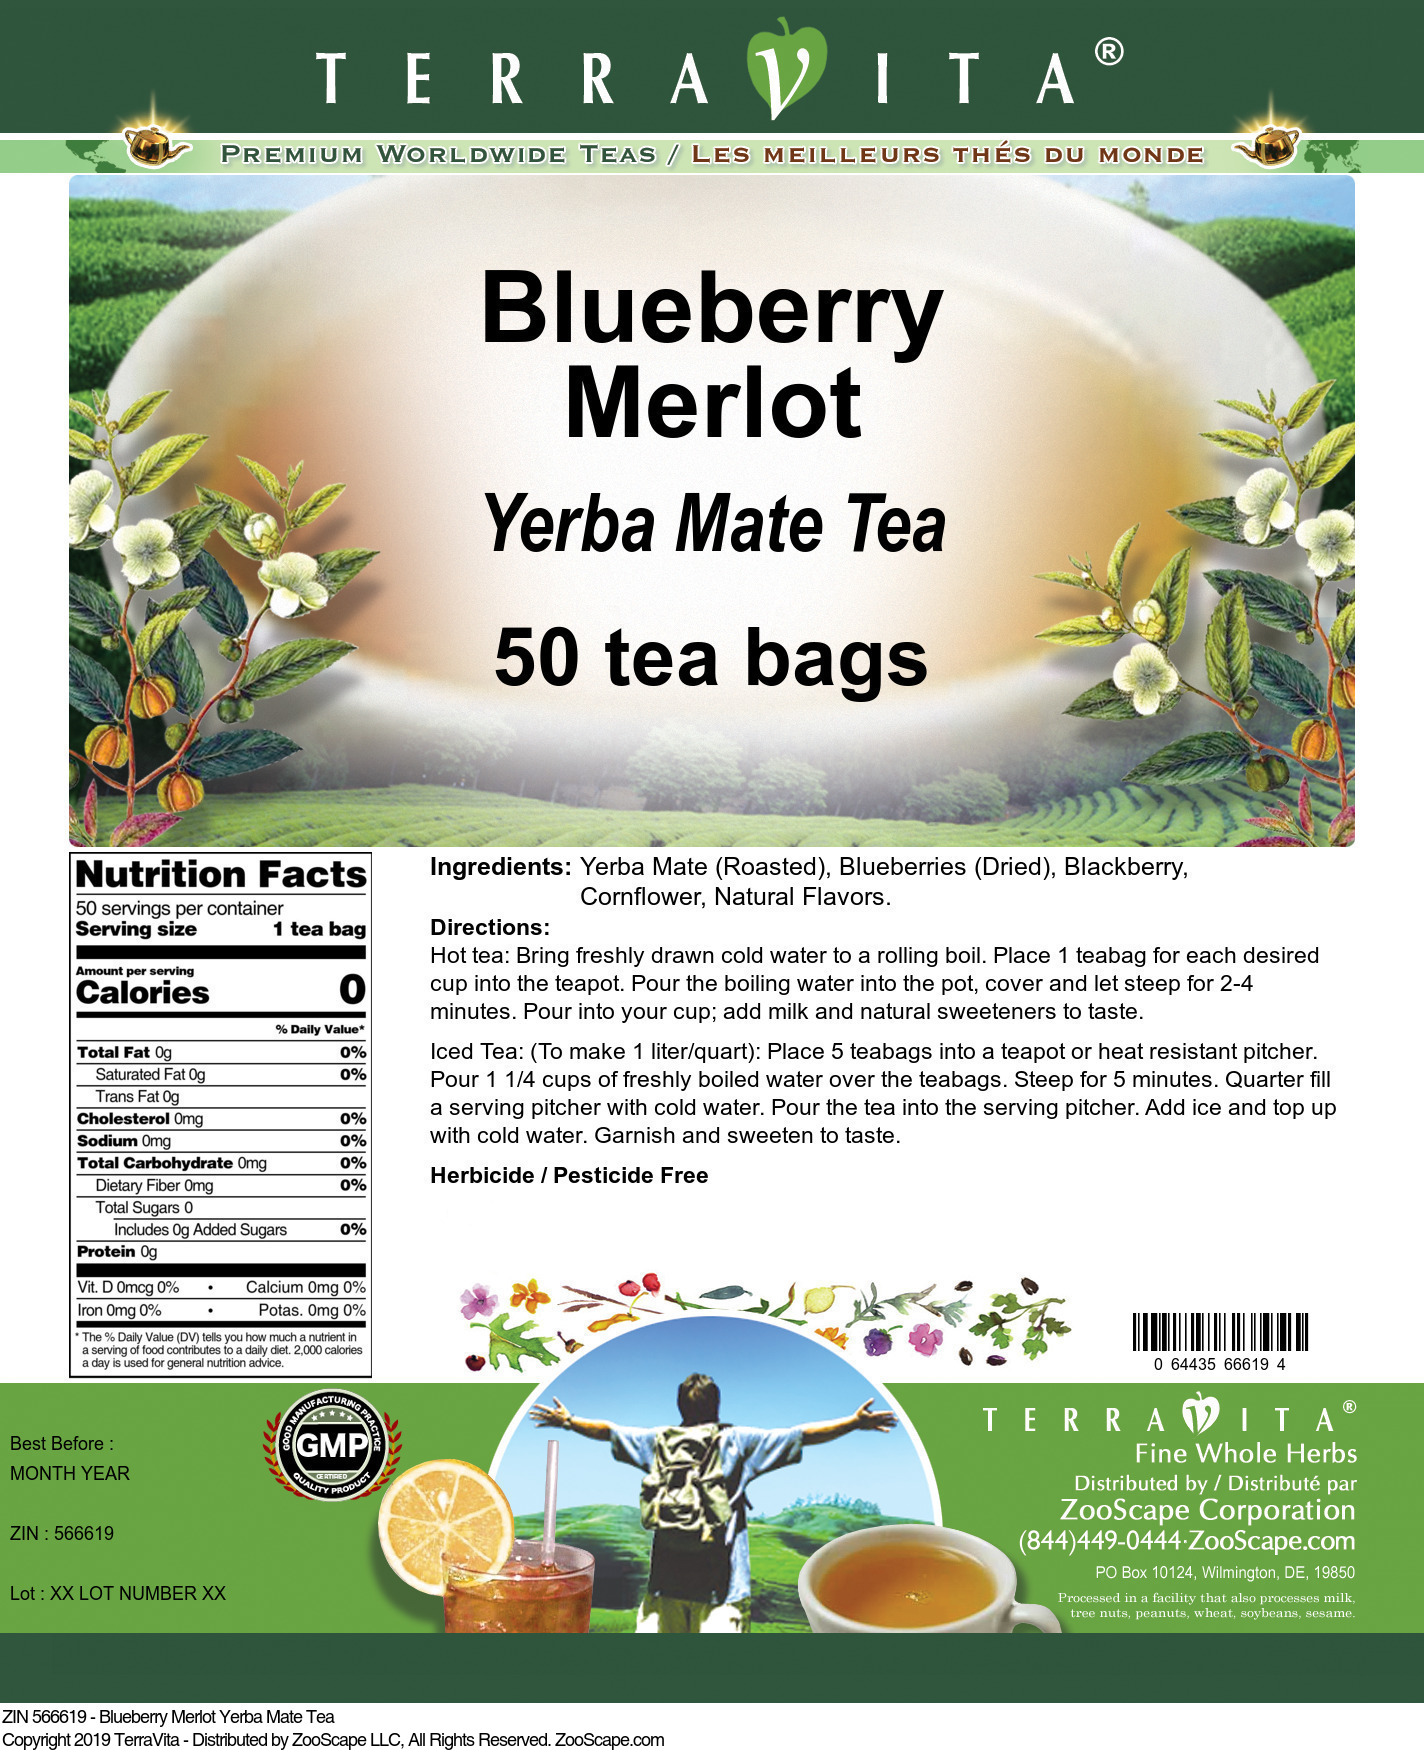 Blueberry Merlot Yerba Mate Tea - Label